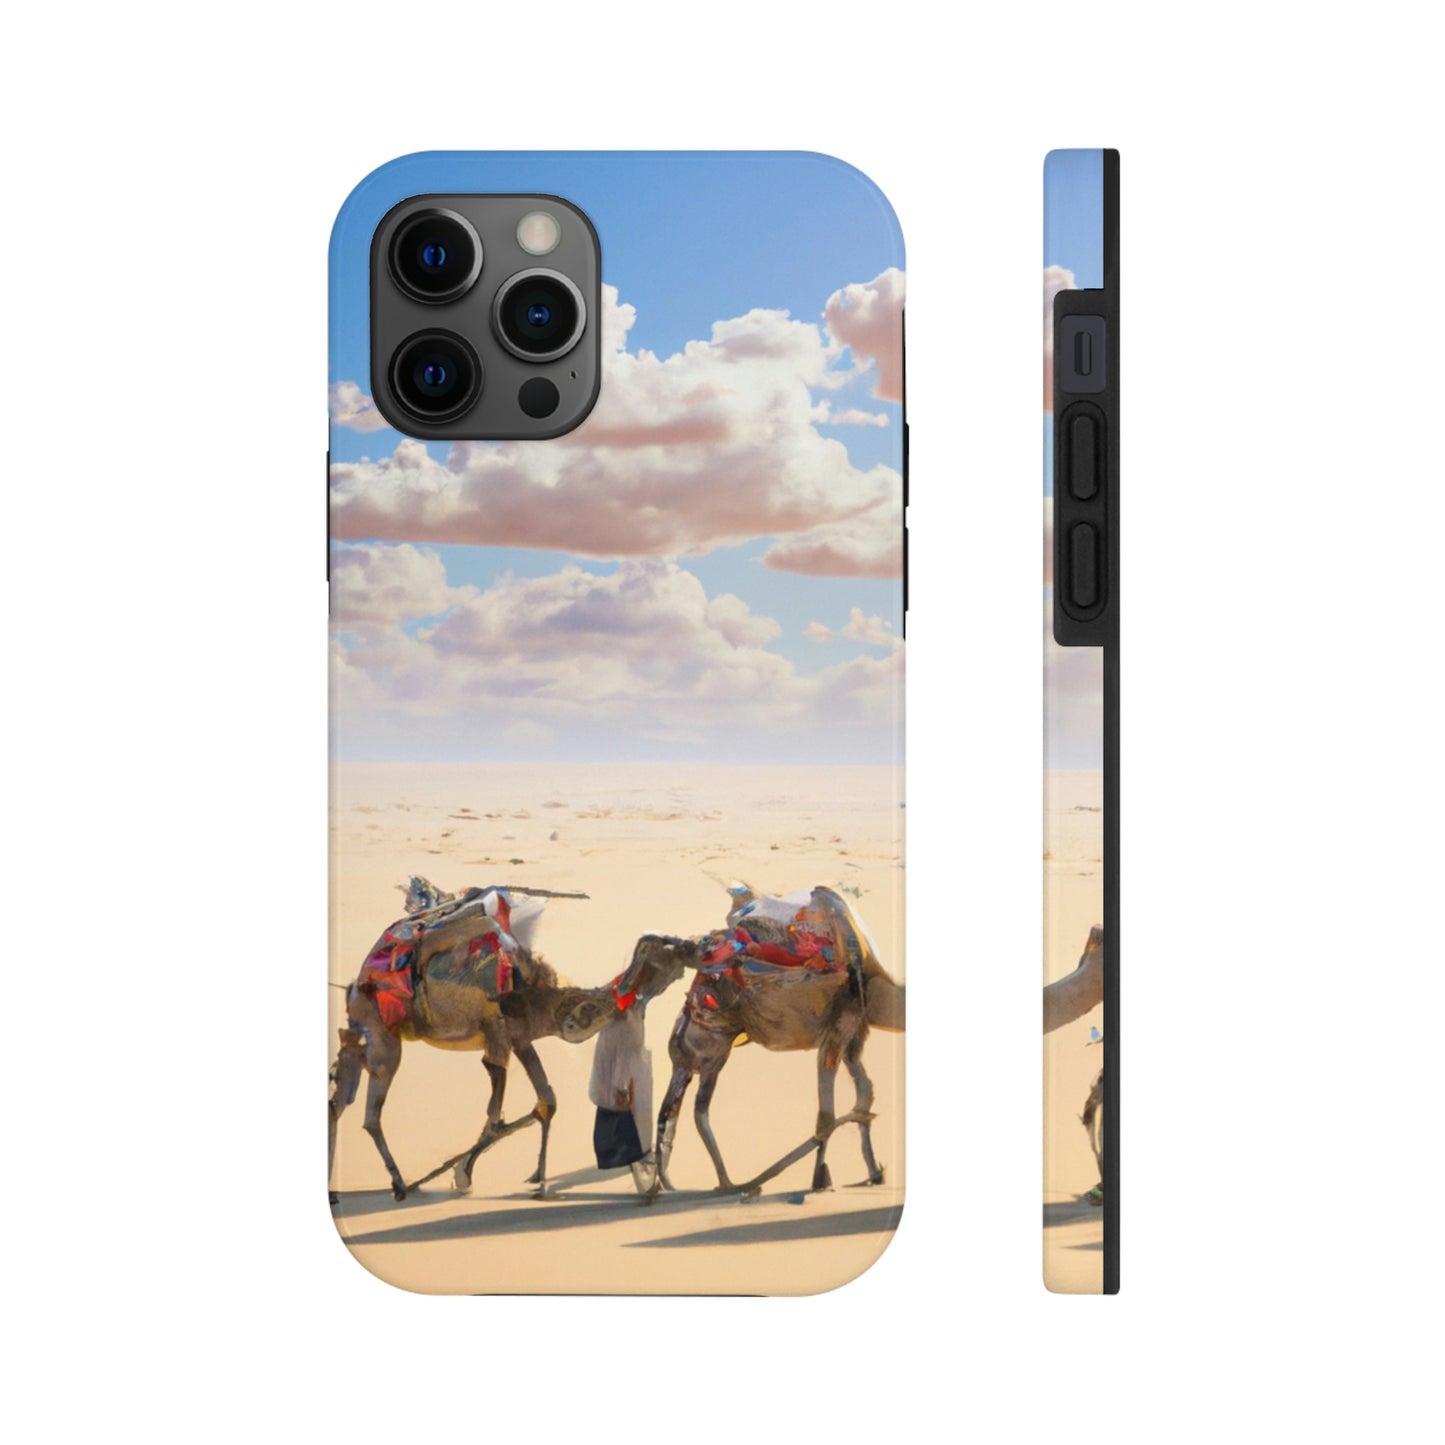 Tough iPhone Cases - Camel Caravan